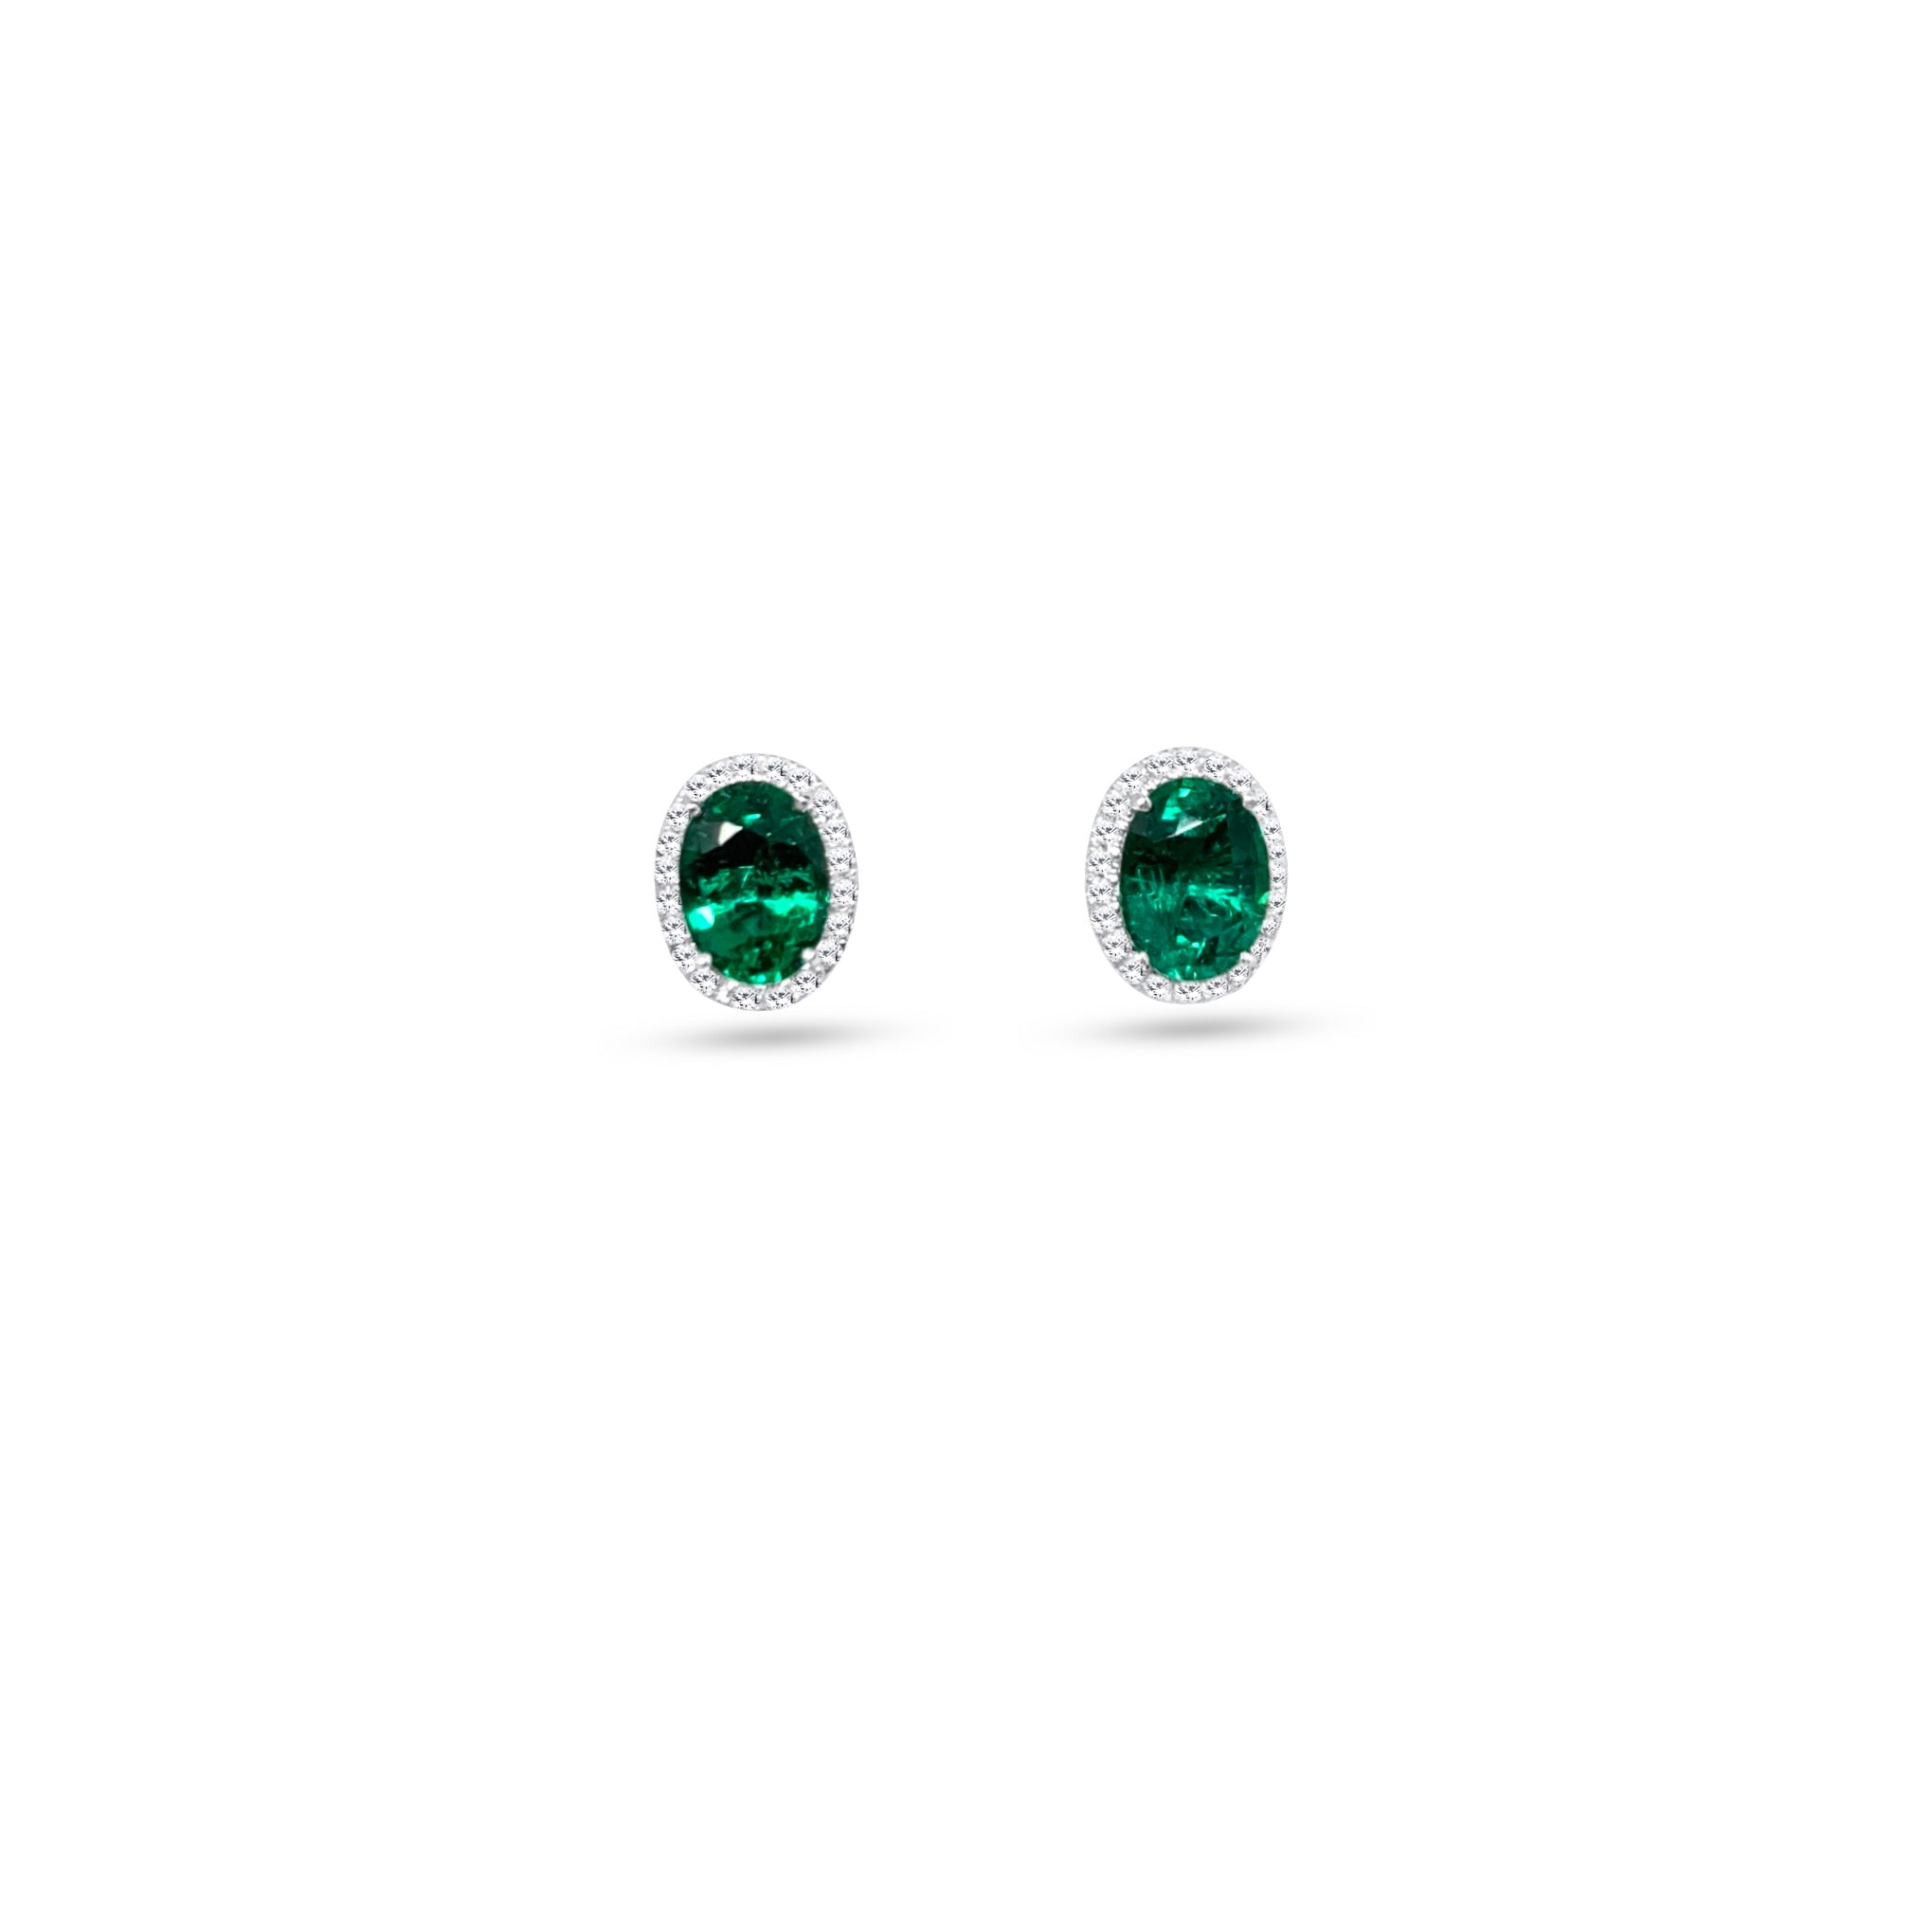 Oval Emerald and Diamond Halo Stud Earrings